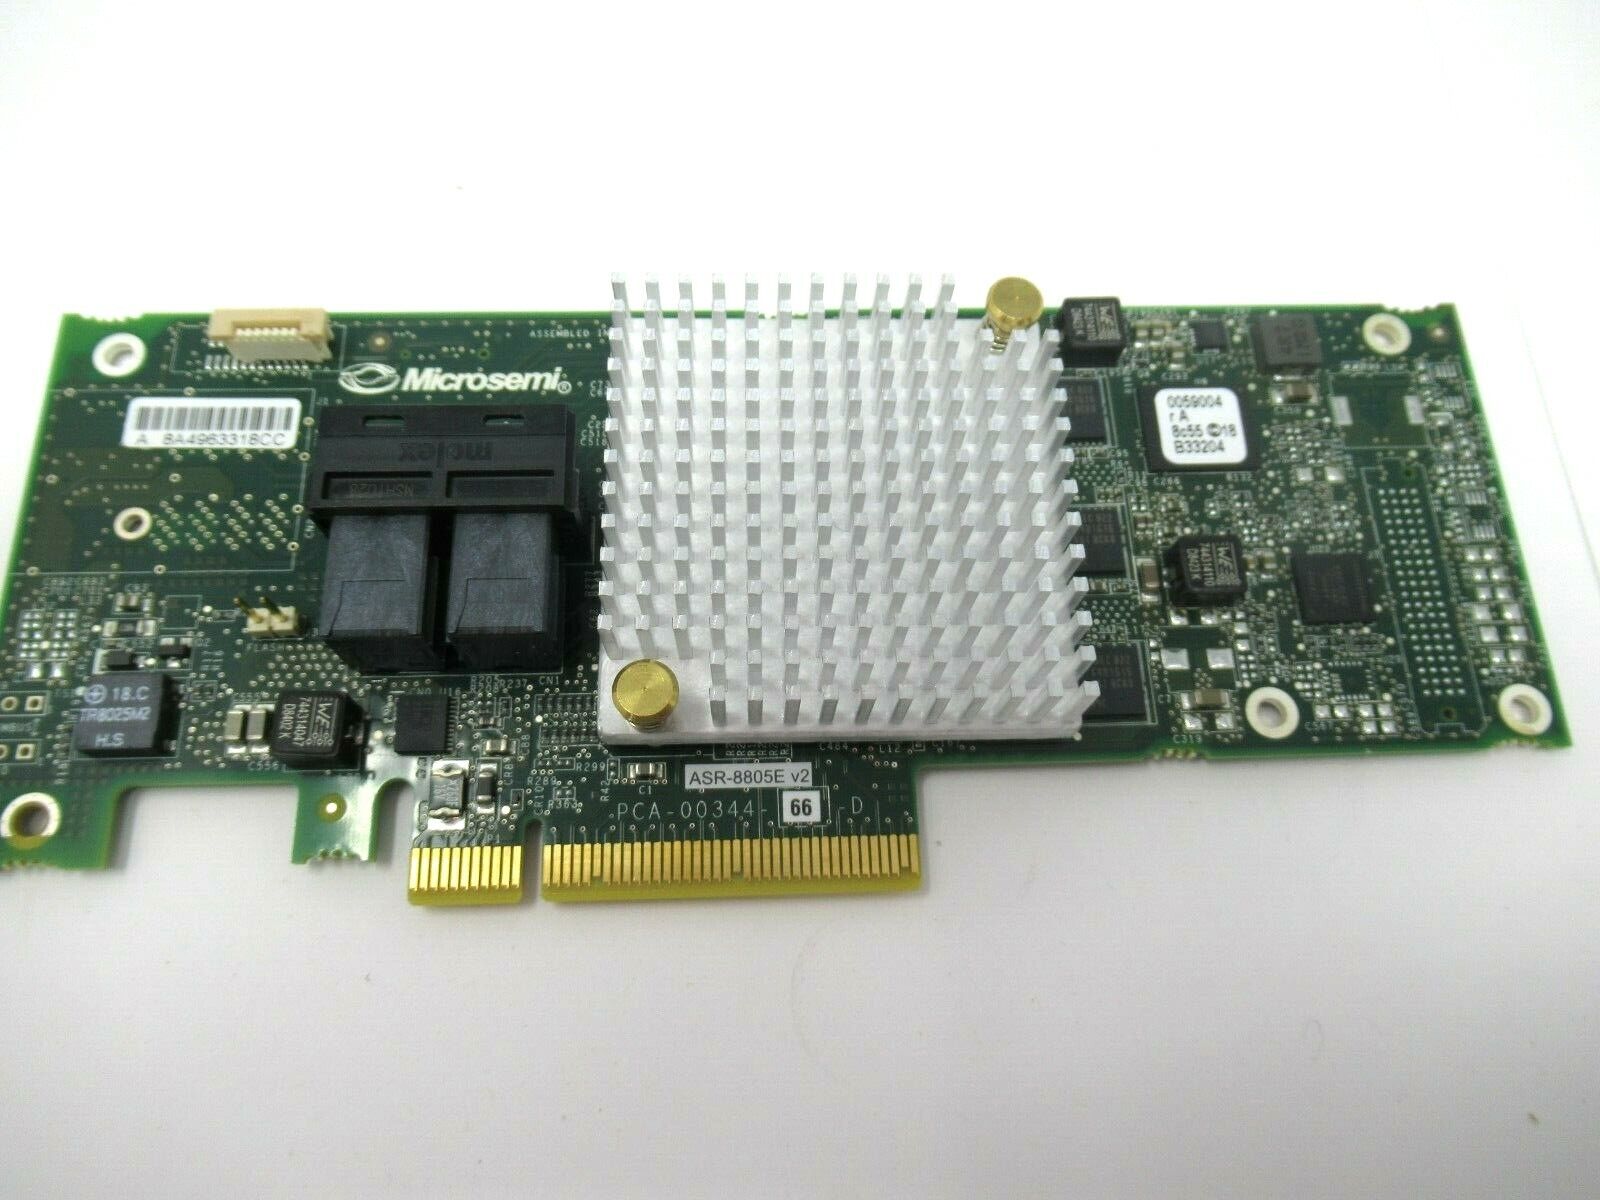  ﻿Adaptec ASR-8805E V2 Single 12Gb/s PCIe SAS/SATA3 RAID Controller *NEW*